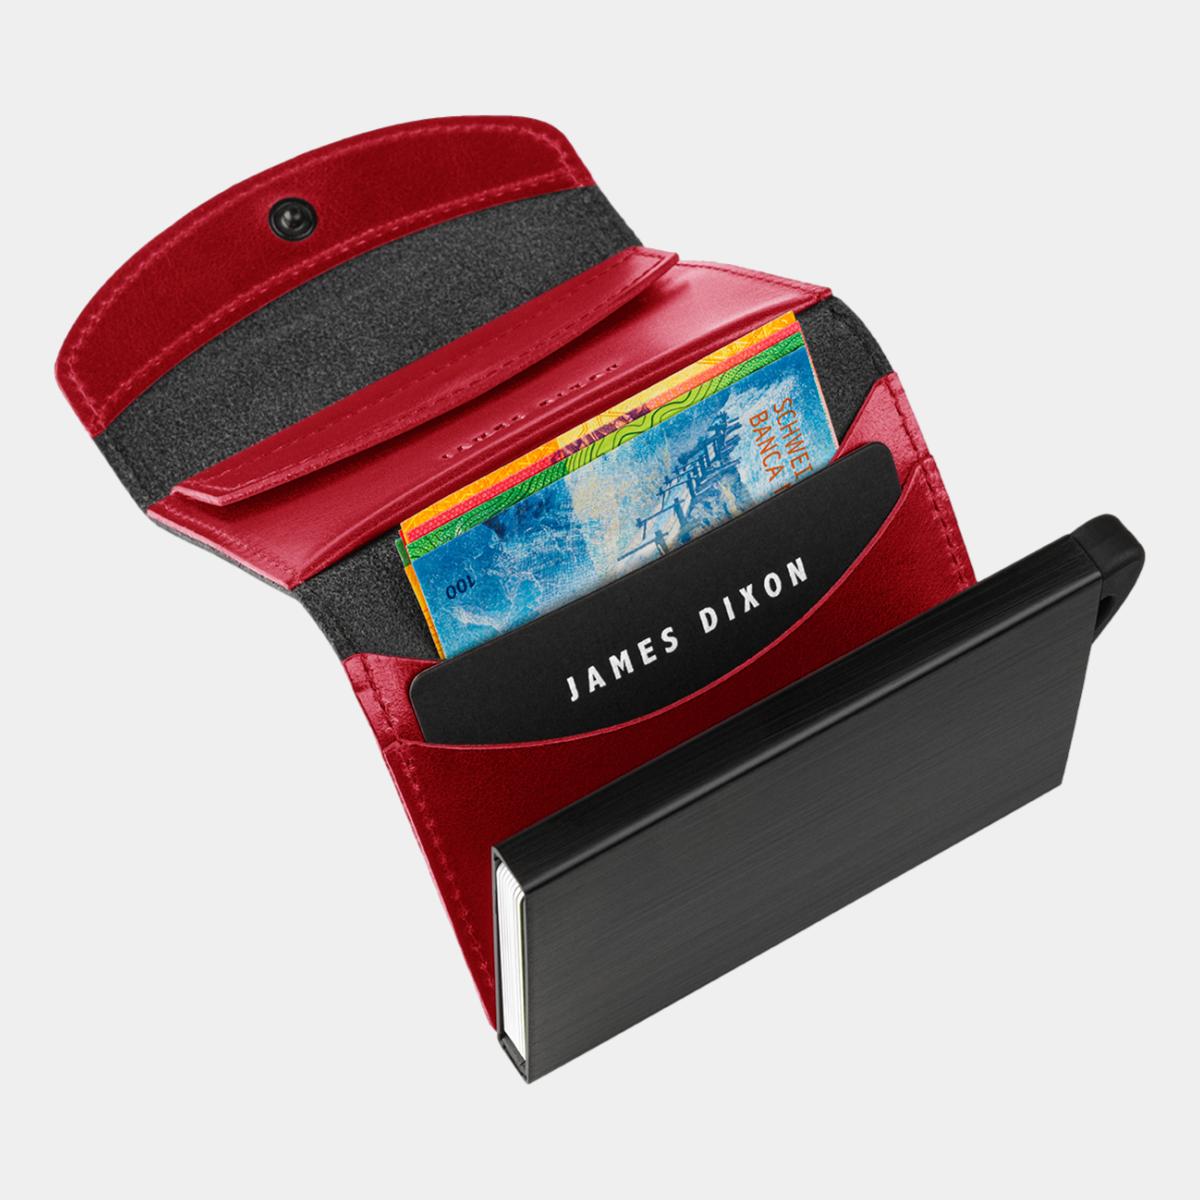 jd0225 james dixon grande classic black devil red coin pocket wallet notes